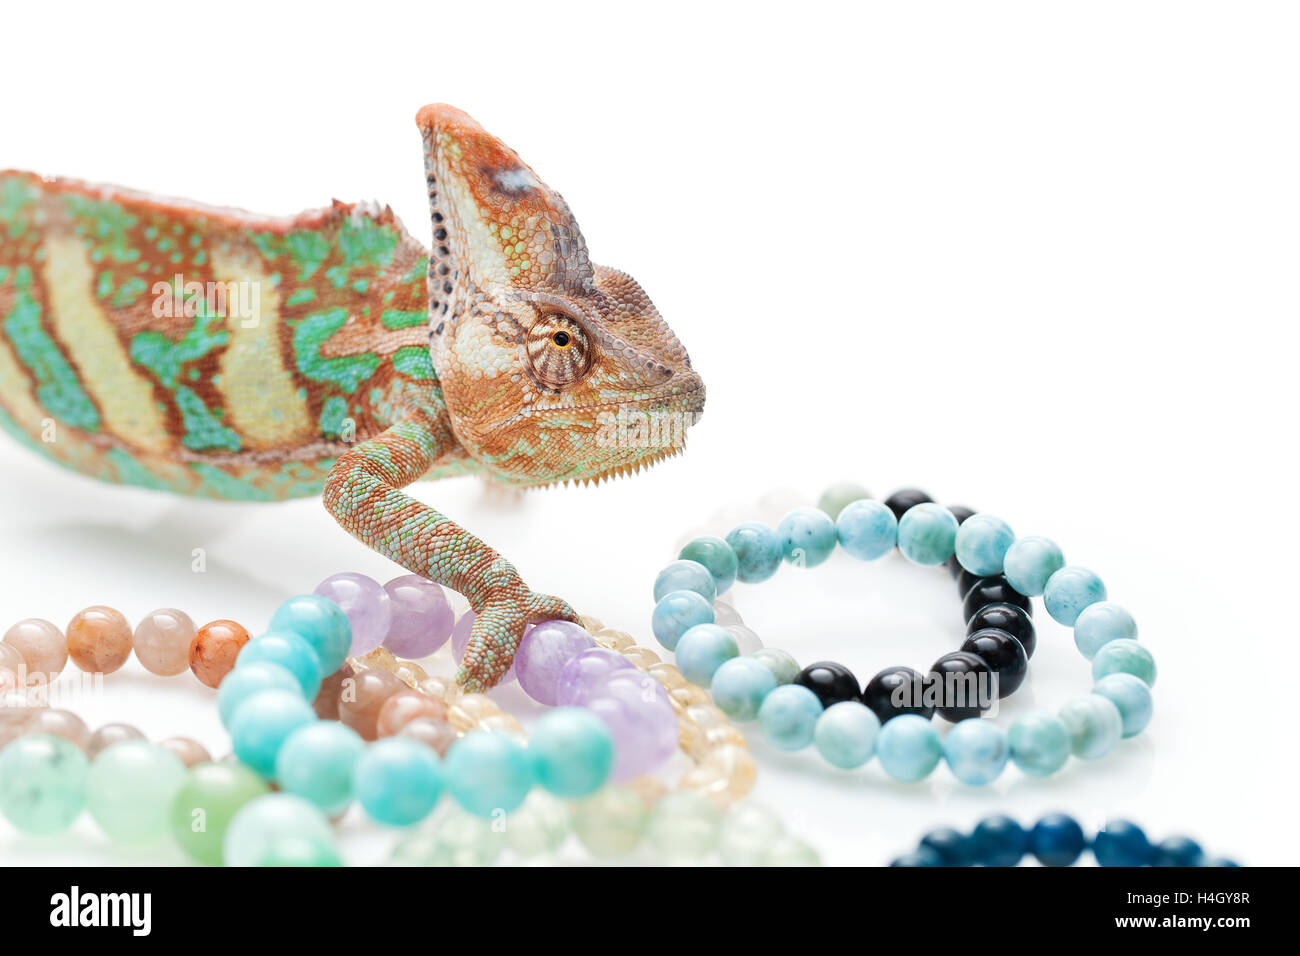 Beautiful chameleon with natural stone bracelets Stock Photo